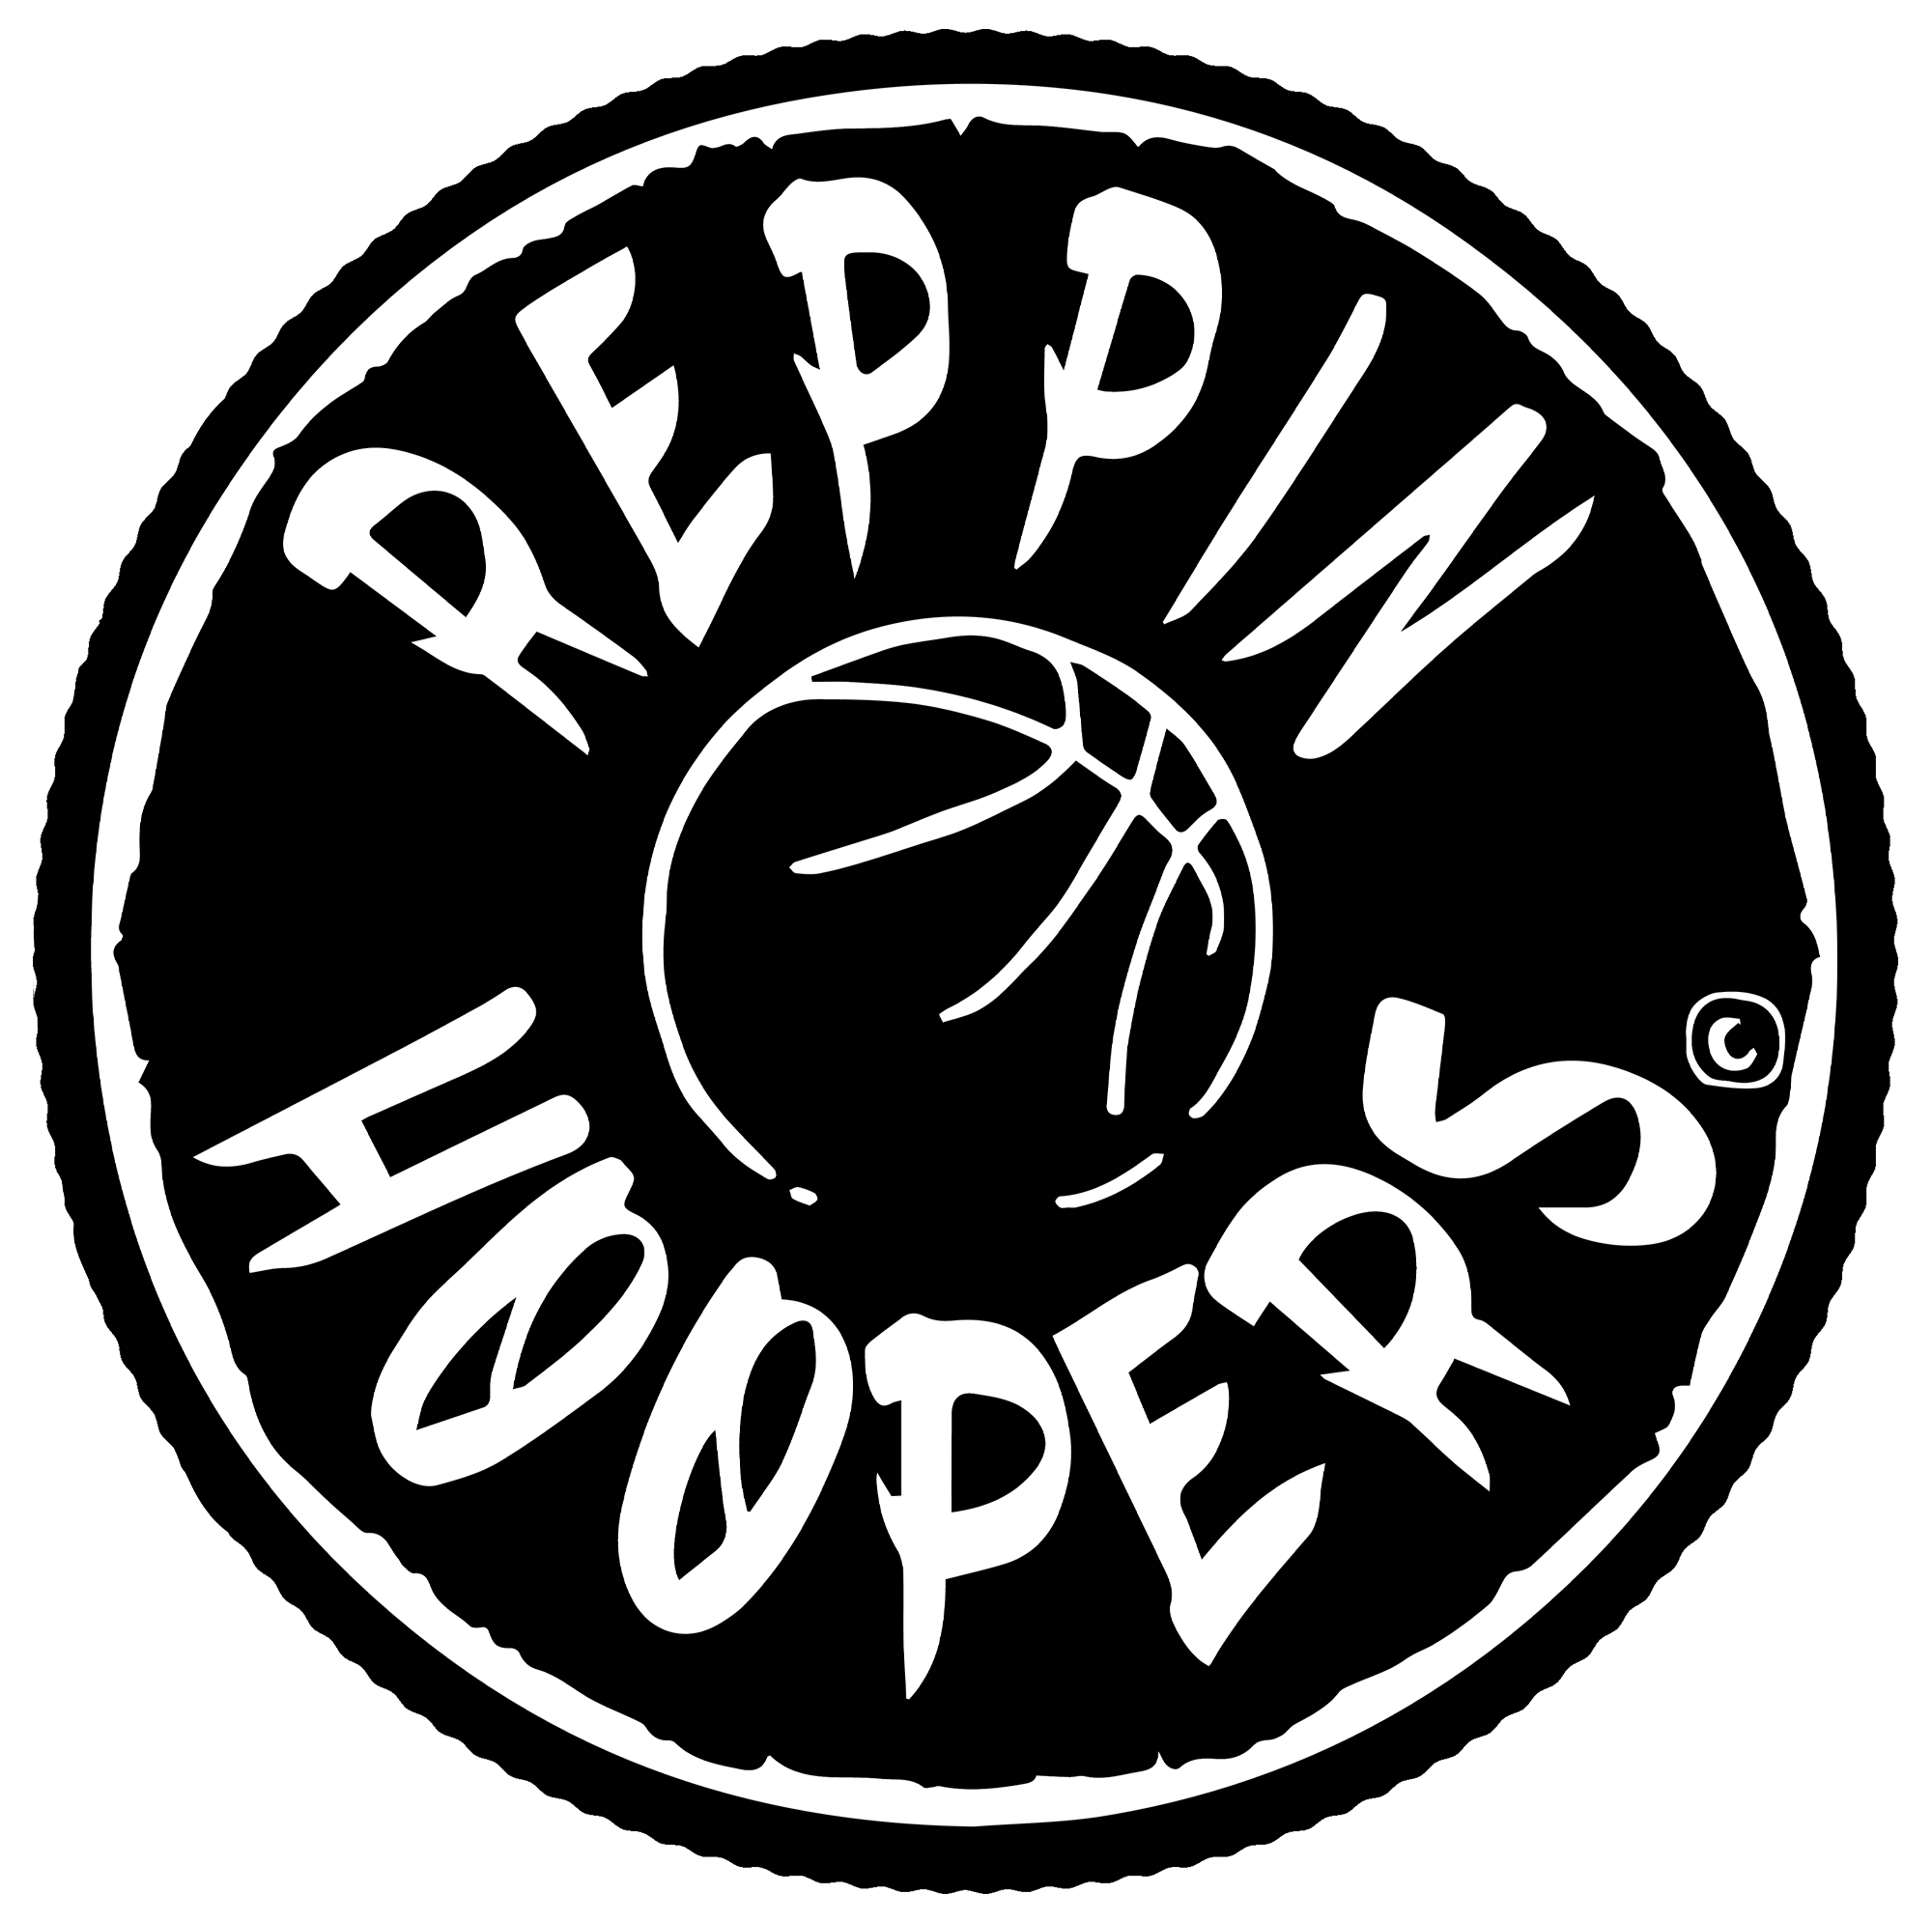 Reppin Hoopers